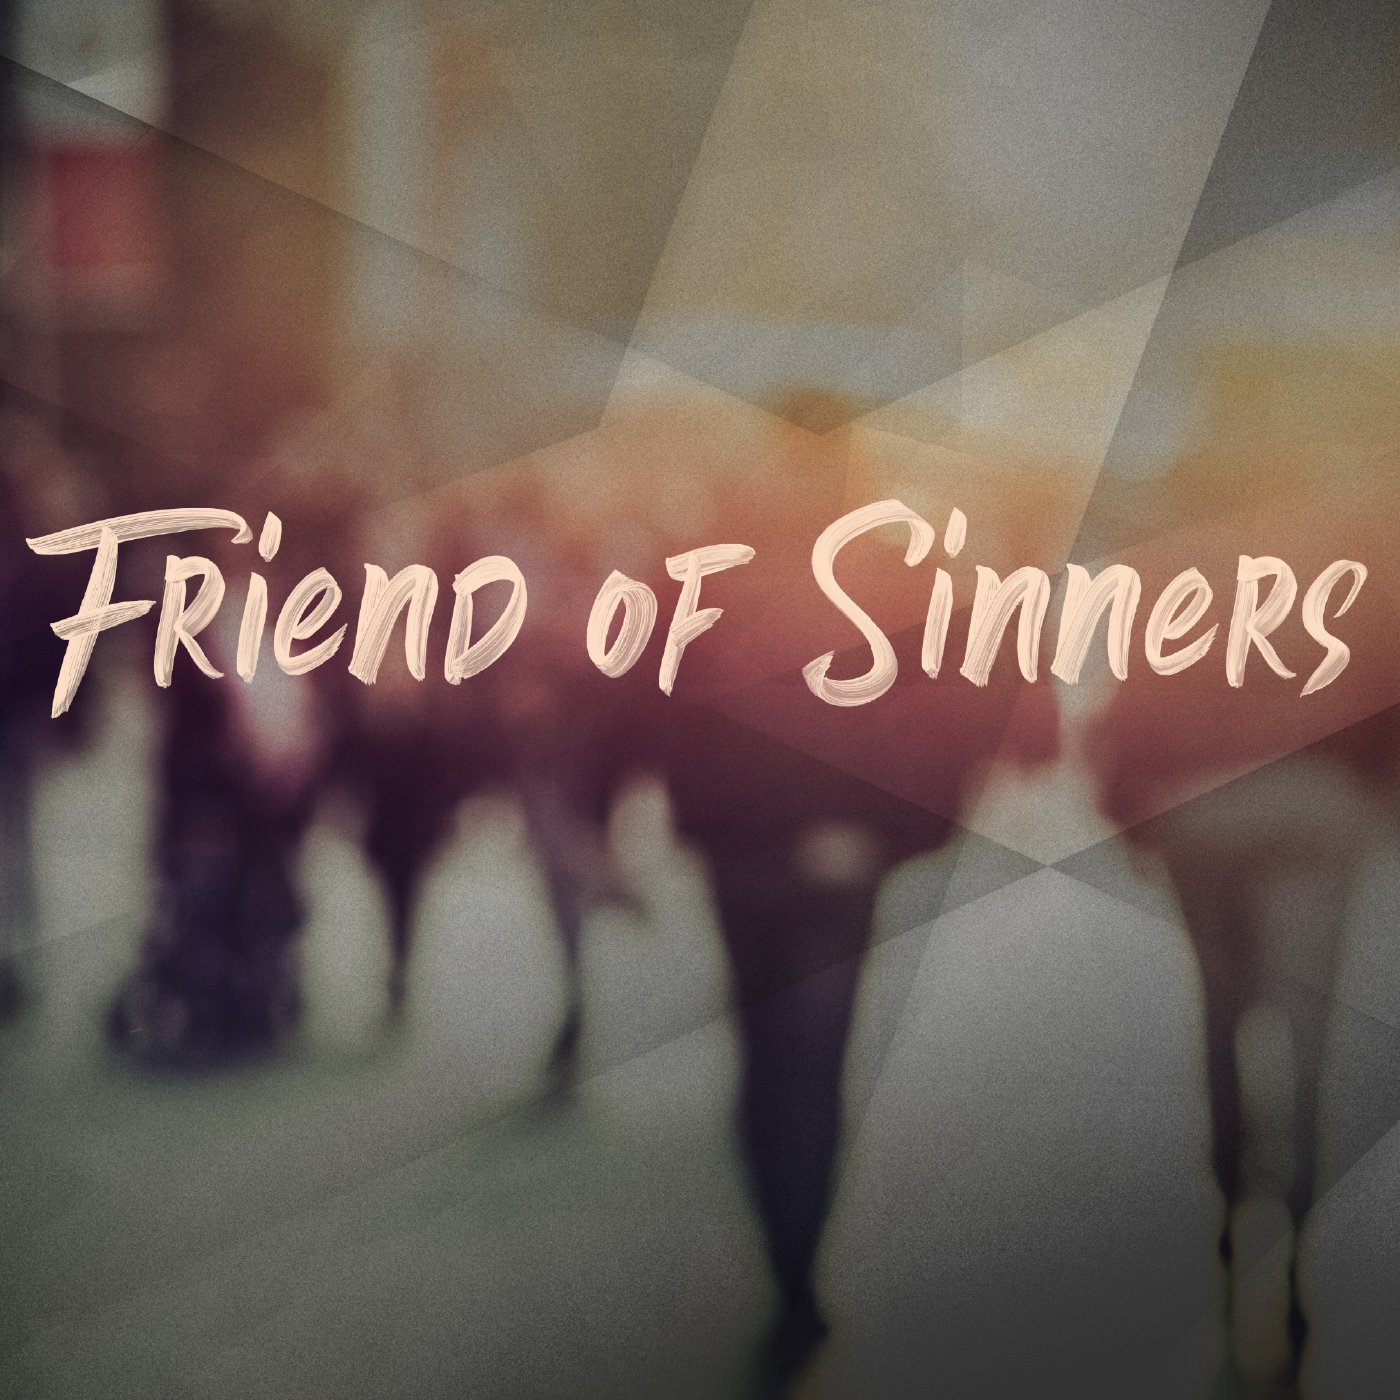 Friend of Sinners, Part 10